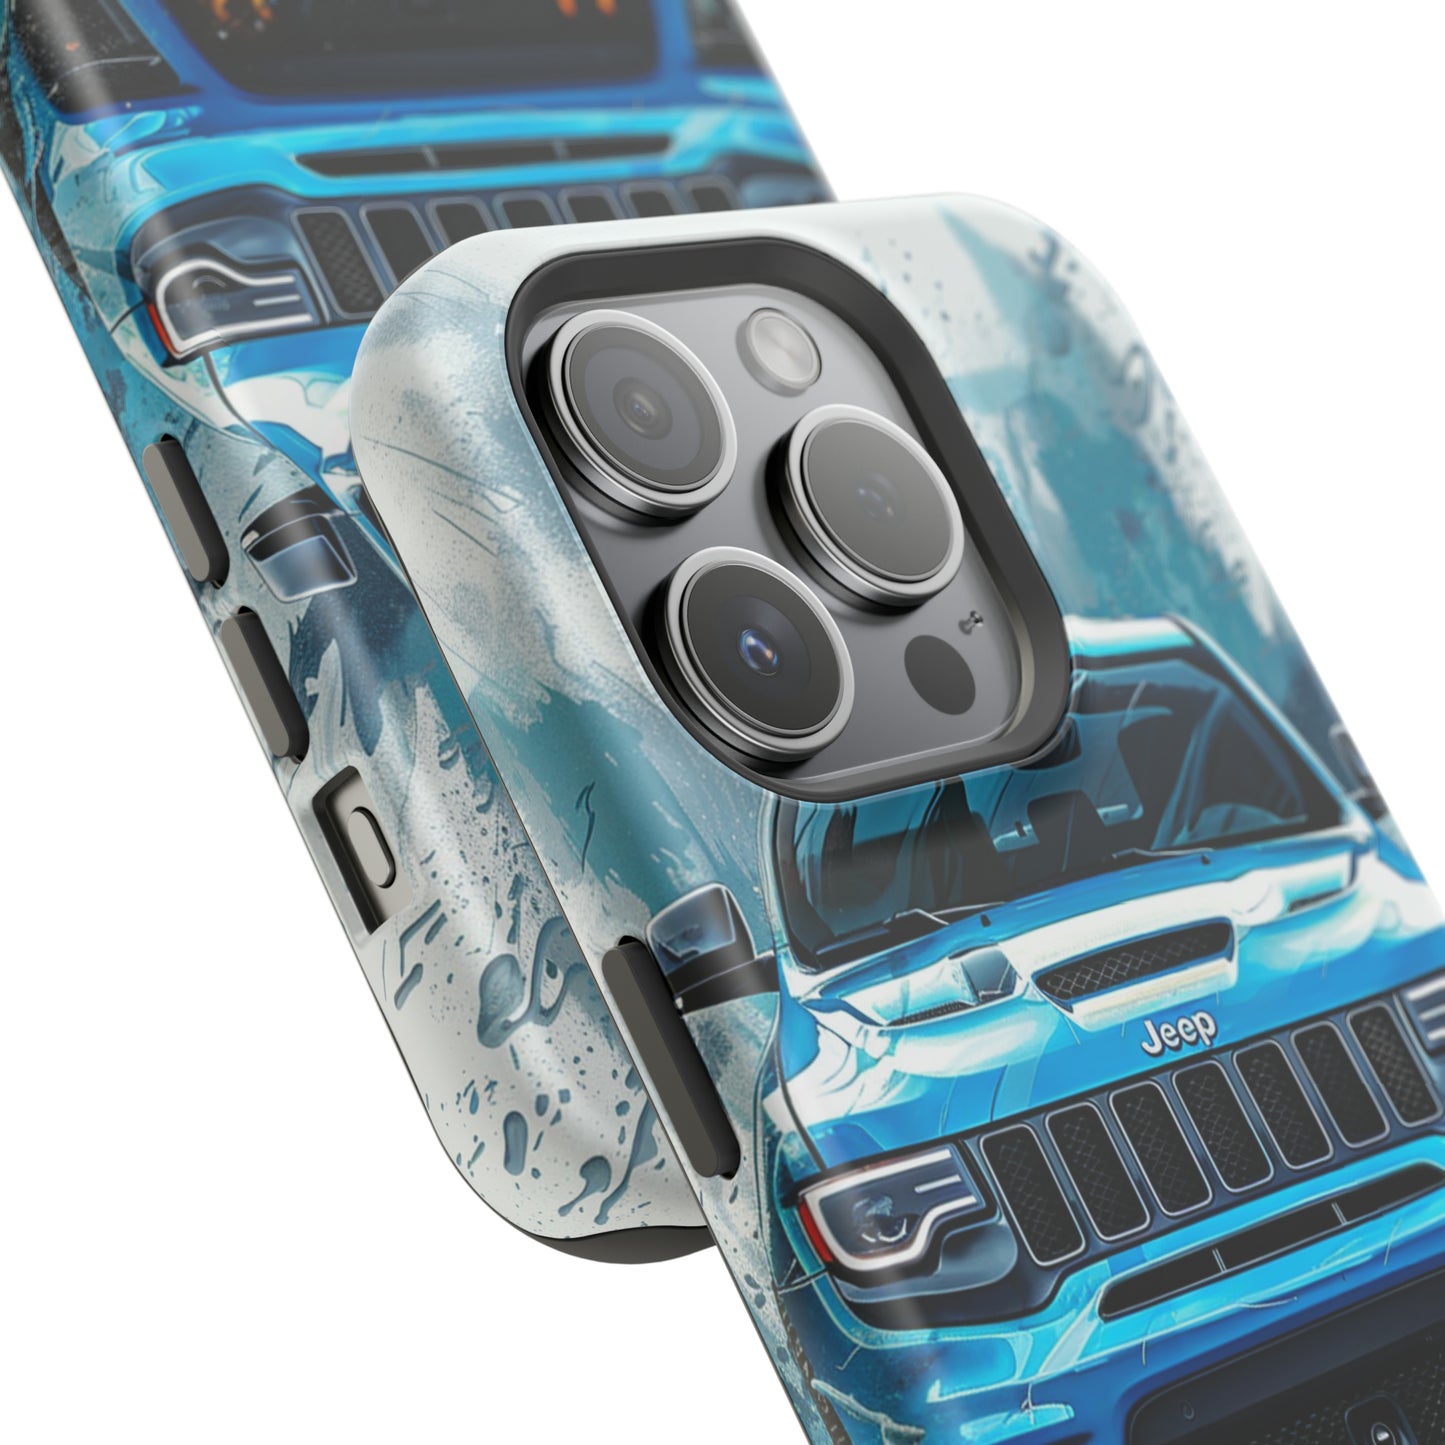 Jeep SRT Trackhawk Ice Blue MagSafe Tough iPhone Case